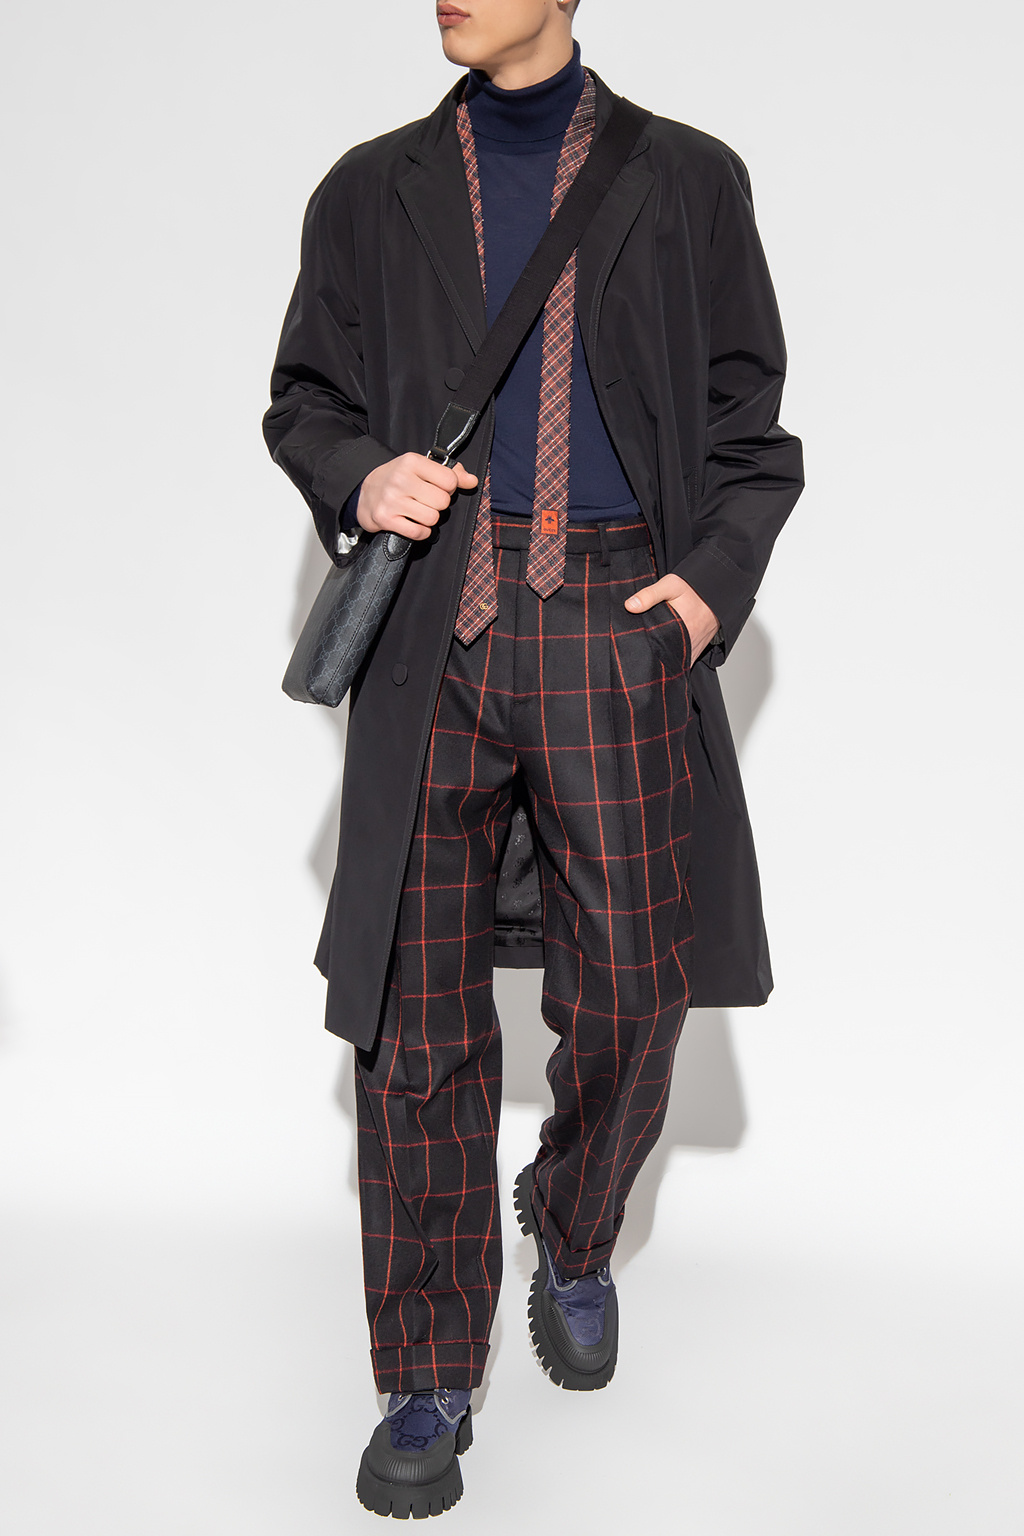 Gucci Loose-fitting coat